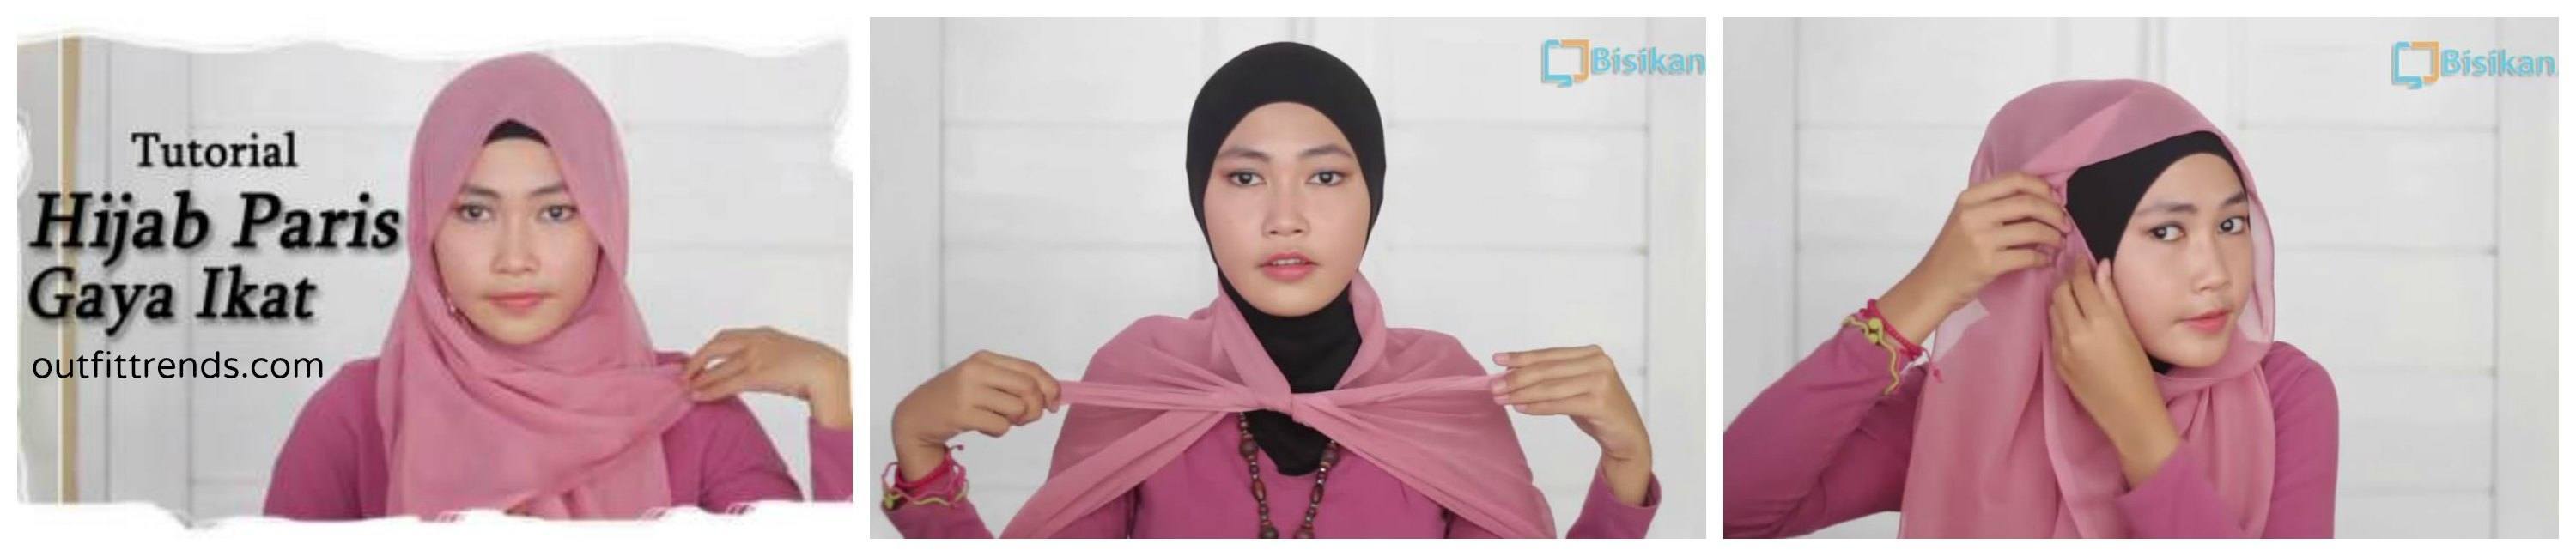 10 Simple Hijab Paris Tutorials You Can Do Less Than Minute